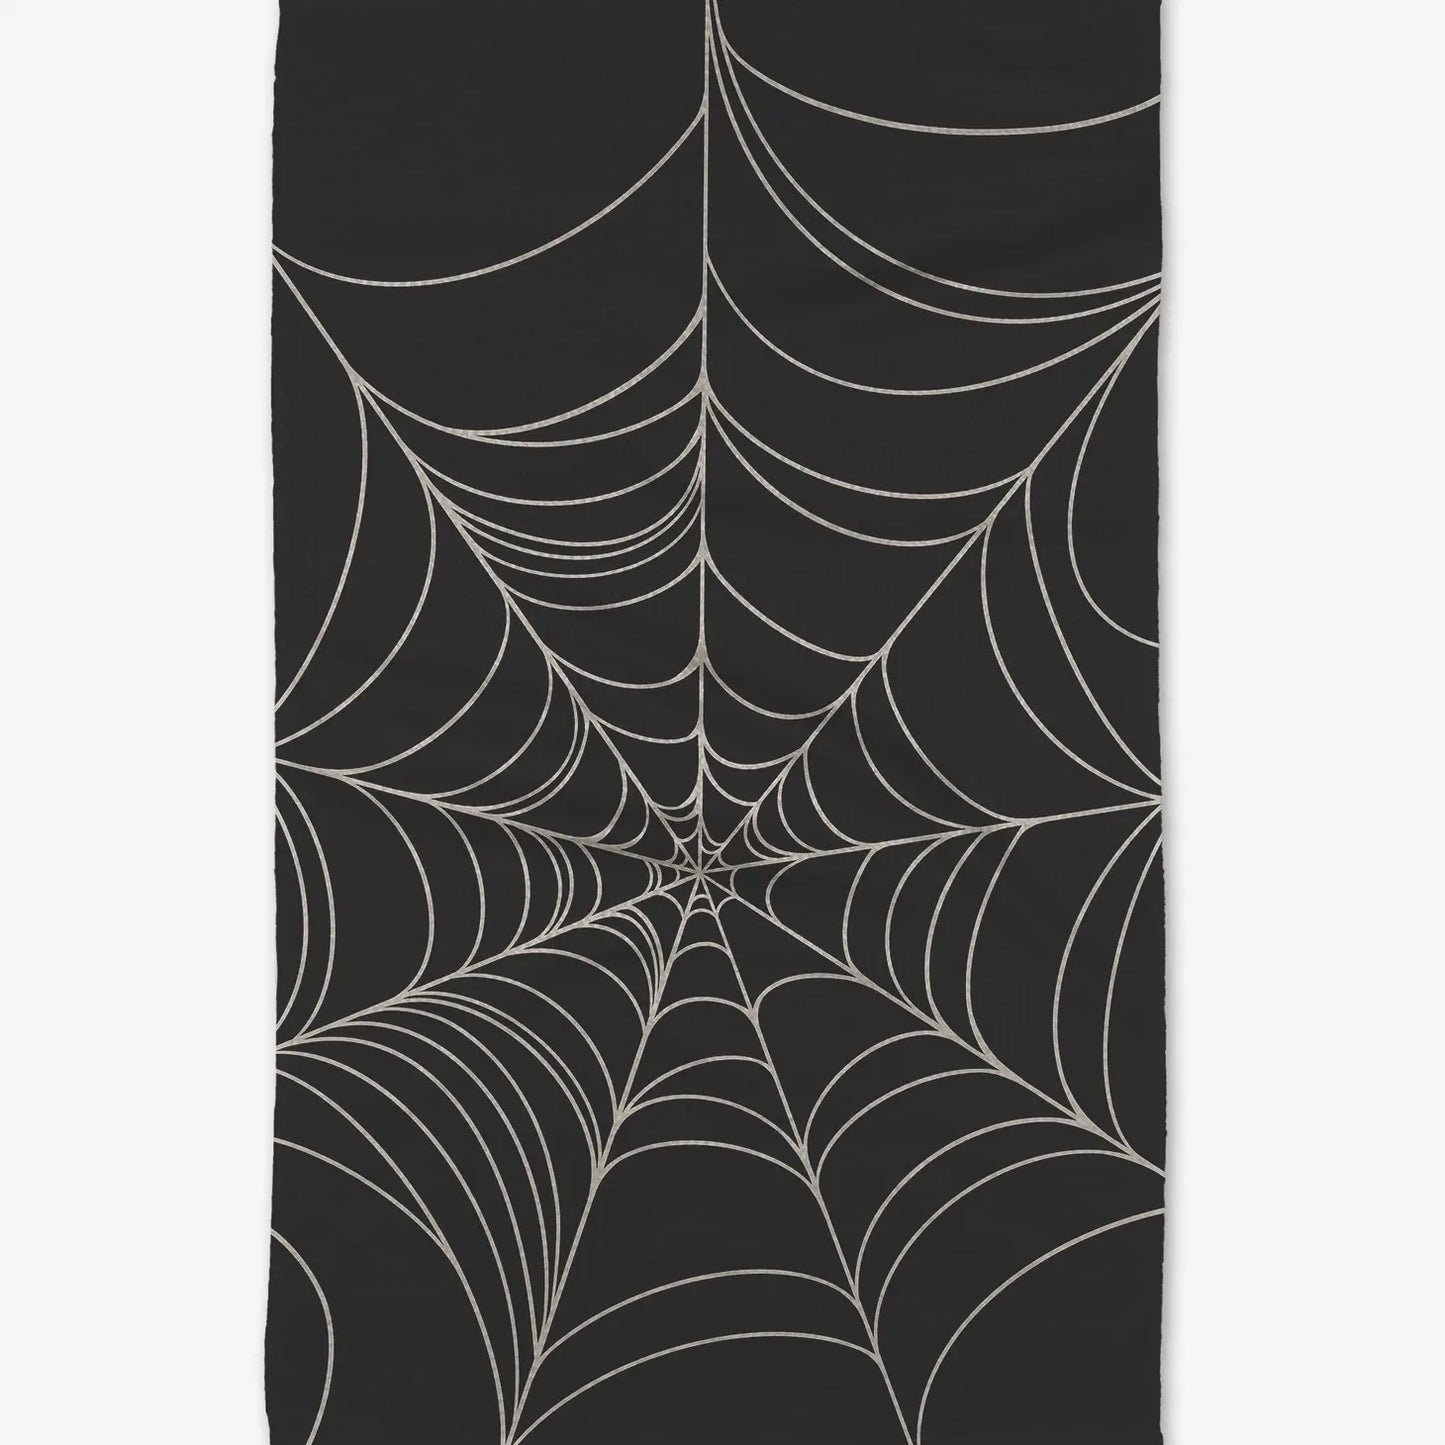 Tea Towel "Spider Web"